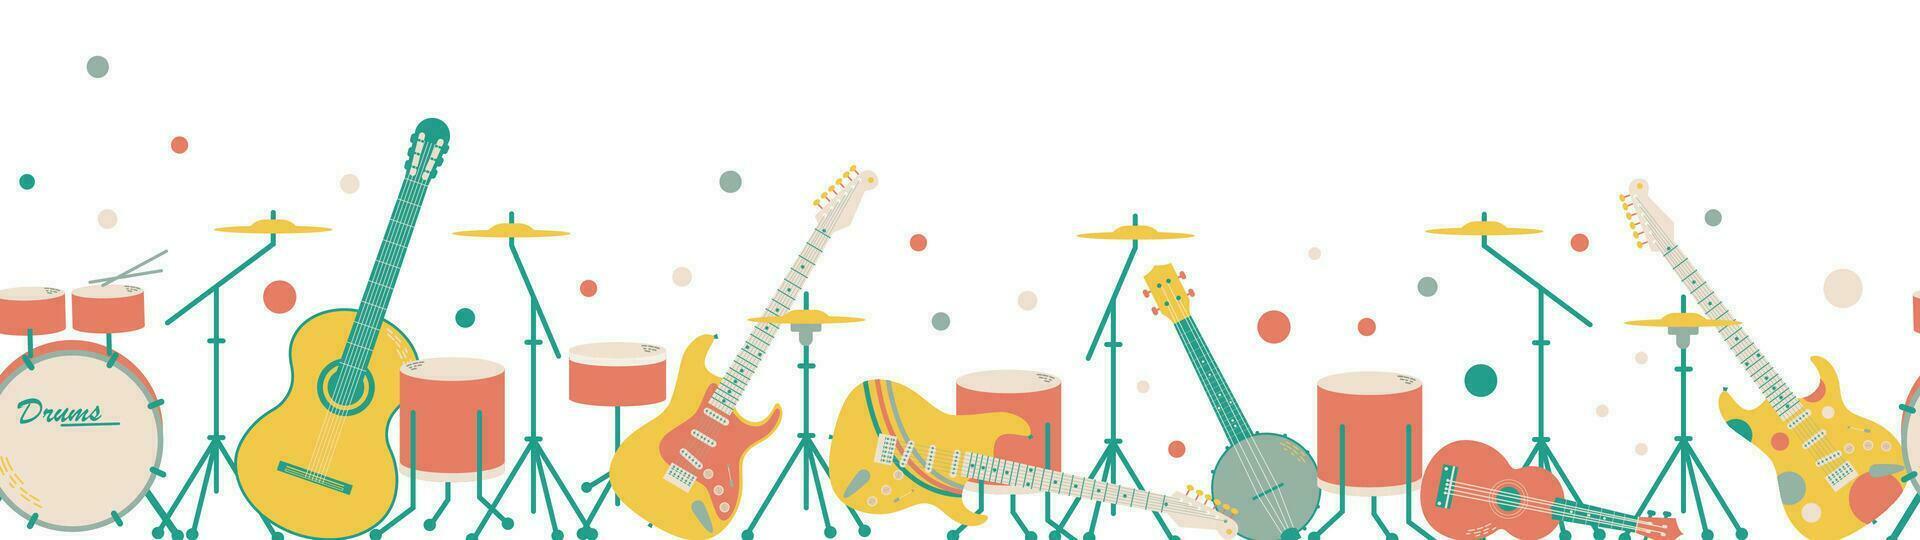 vetor grandes fundo ou bandeira com musical instrumentos. Rocha banda inclui tambor, címbalos, guitarra, elétrico guitarras ou amplificadores, banjo, ukulele